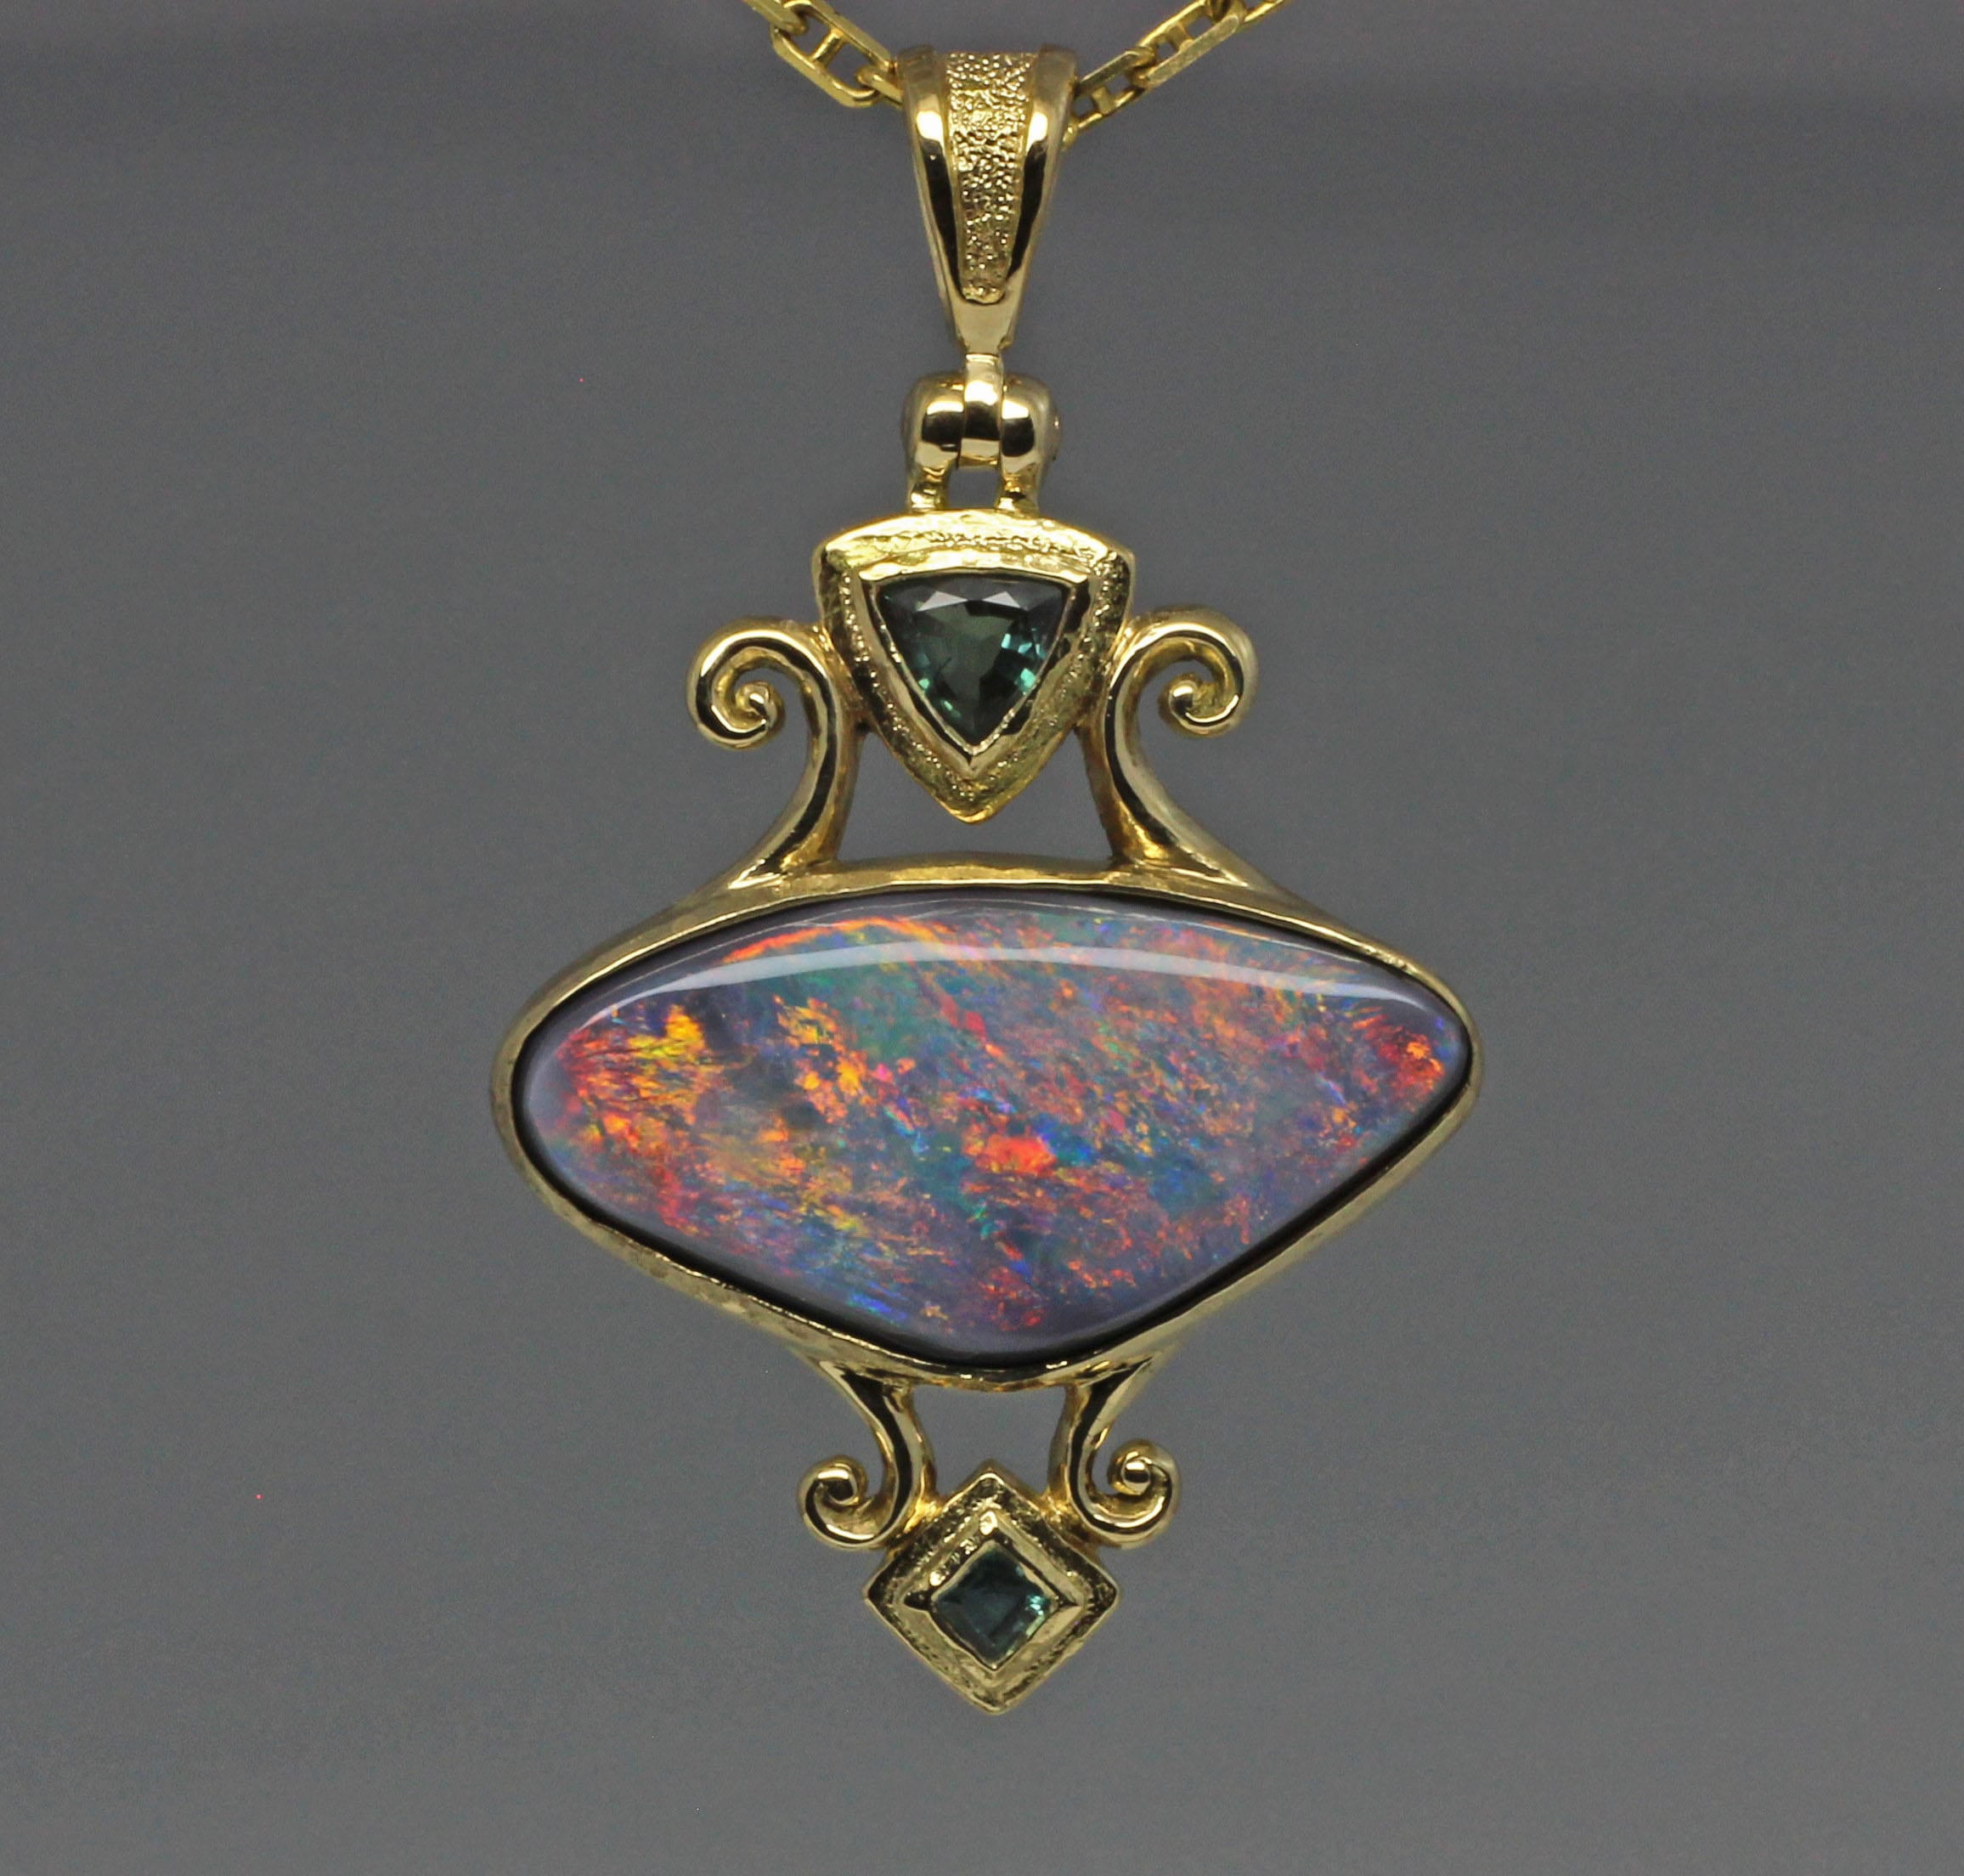 Black opal and Russian alexandrite pendant, in 18k